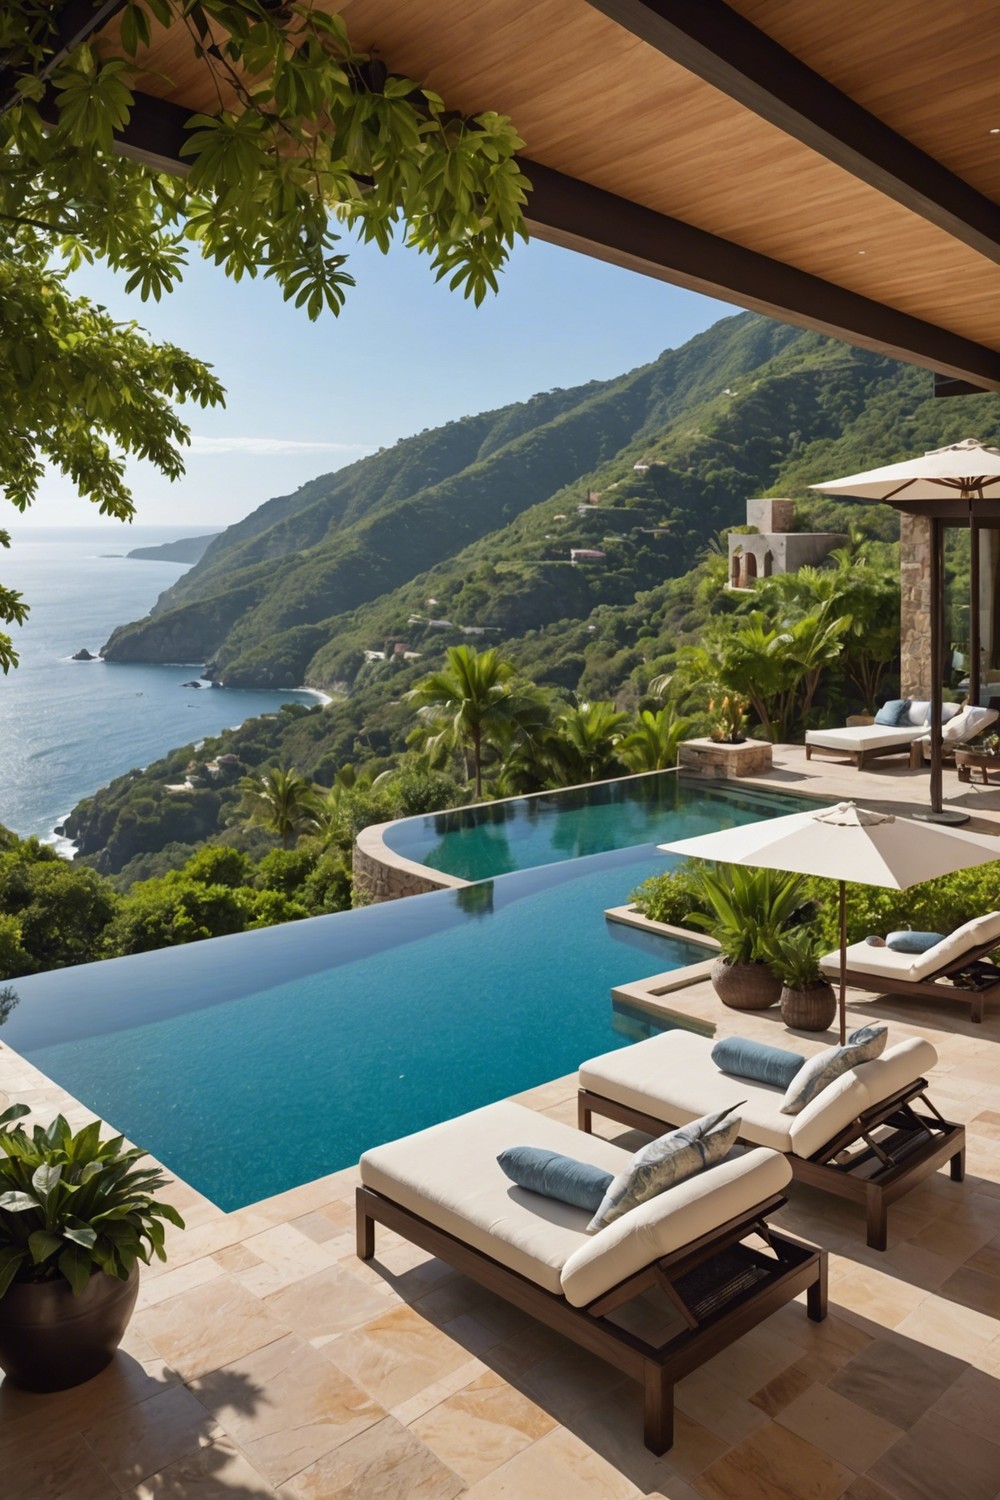 Luxury Patio with Infinity Pool